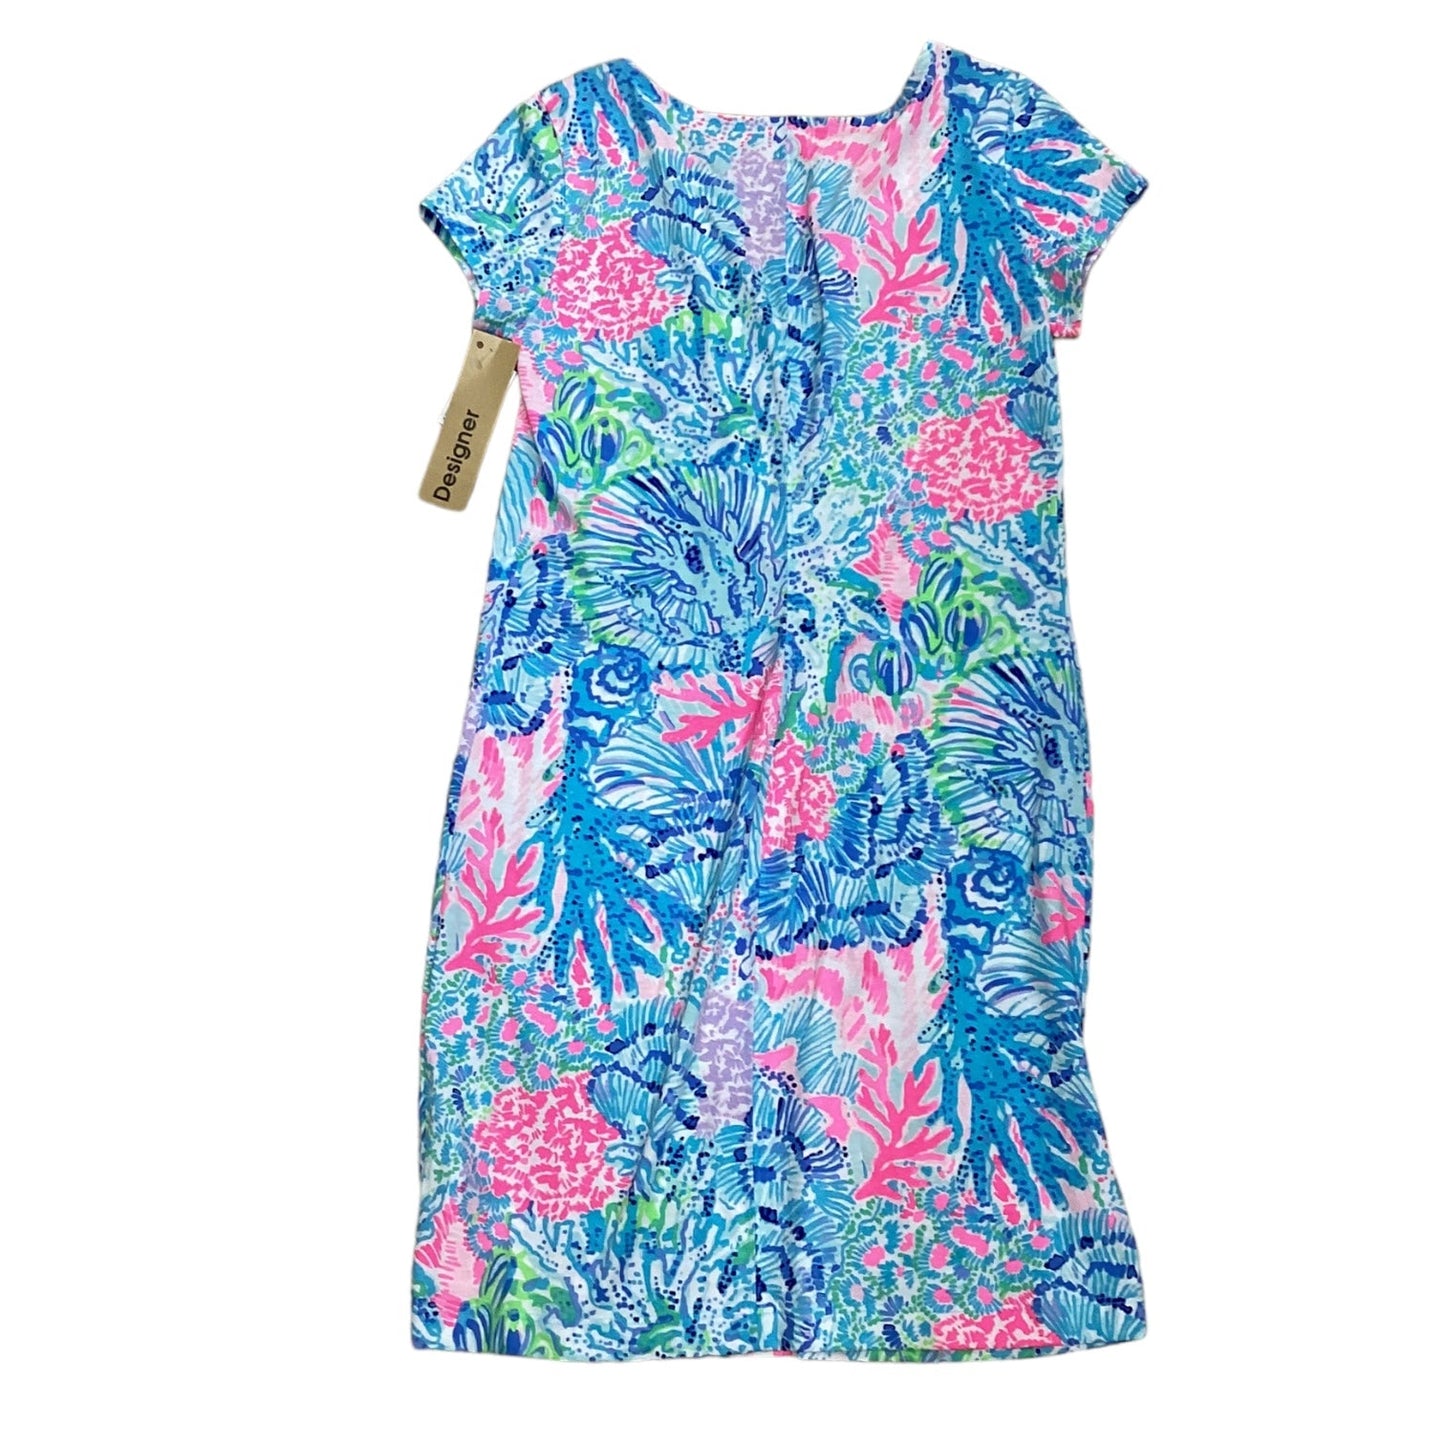 Floral Print Dress Designer Lilly Pulitzer, Size S